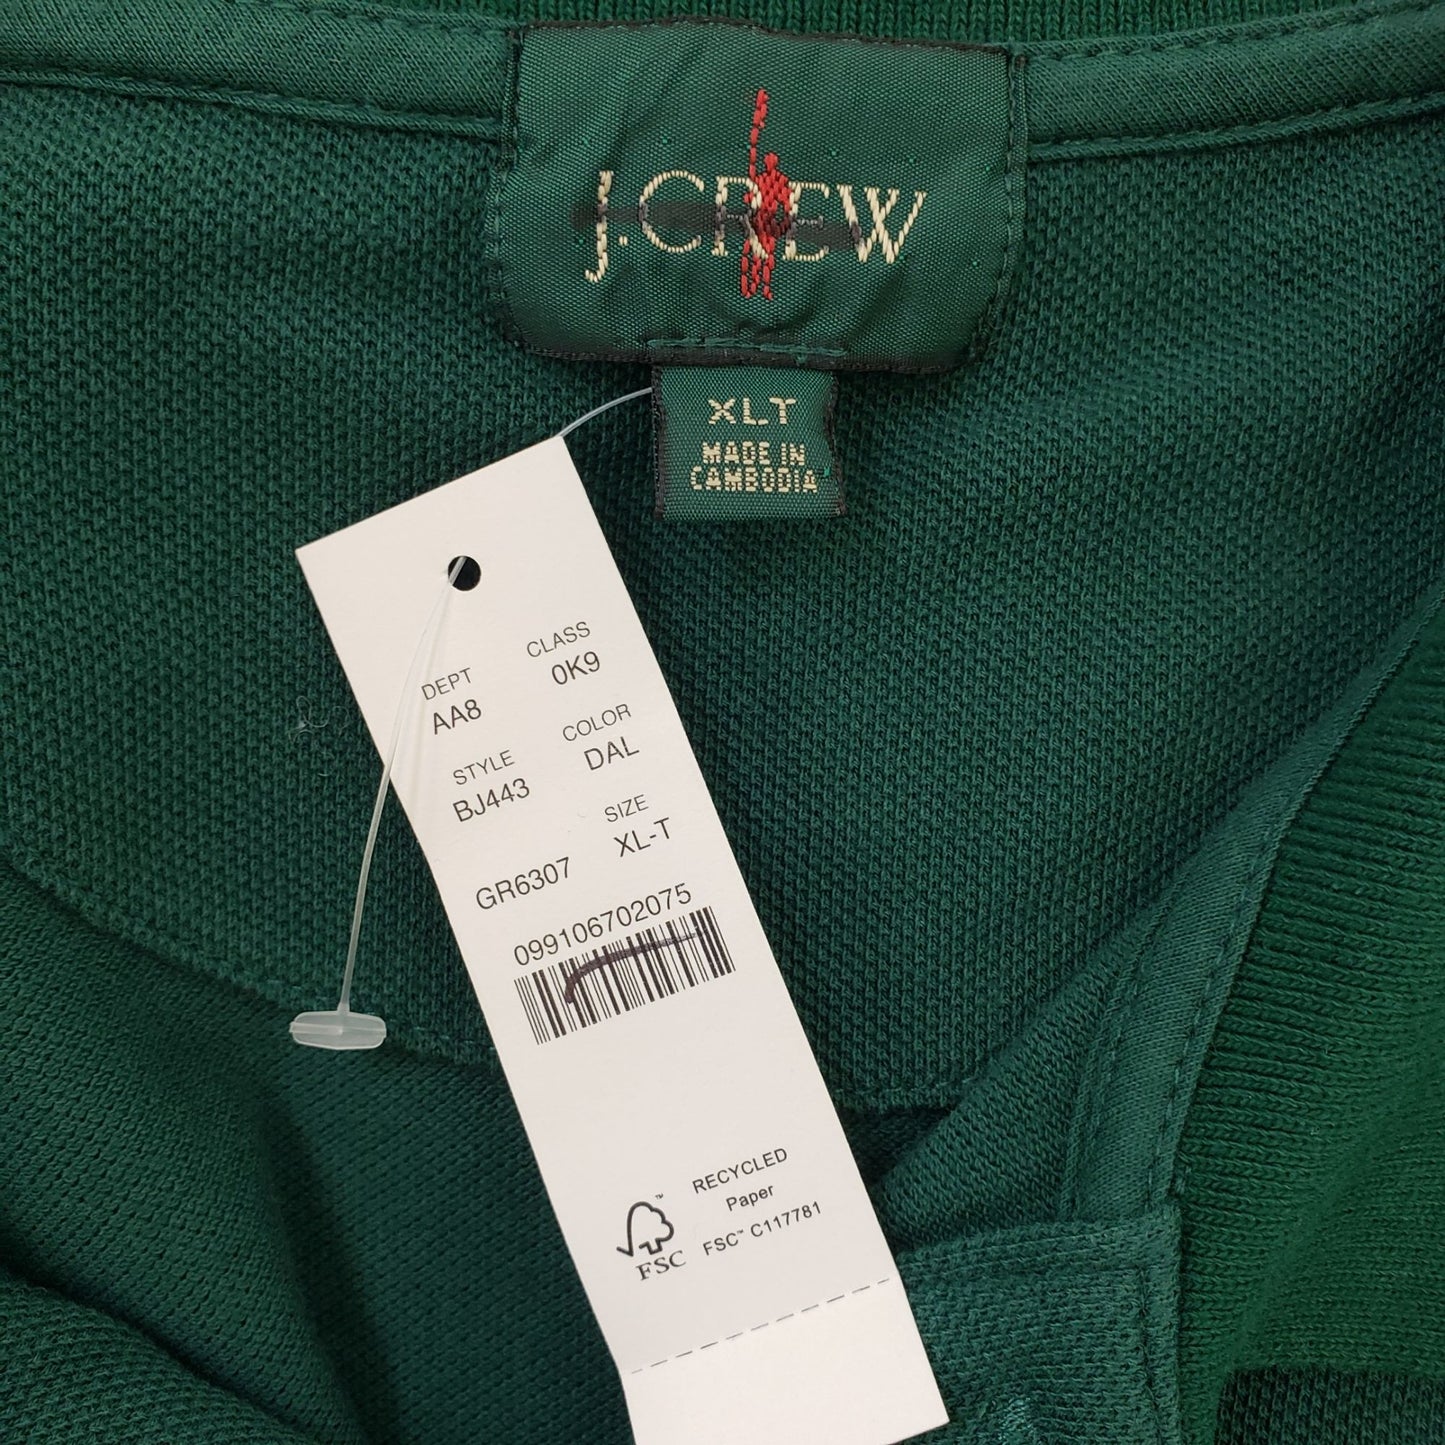 NWT J. Crew Classic Pique Short Sleeve Polo Shirt Size XL Tall